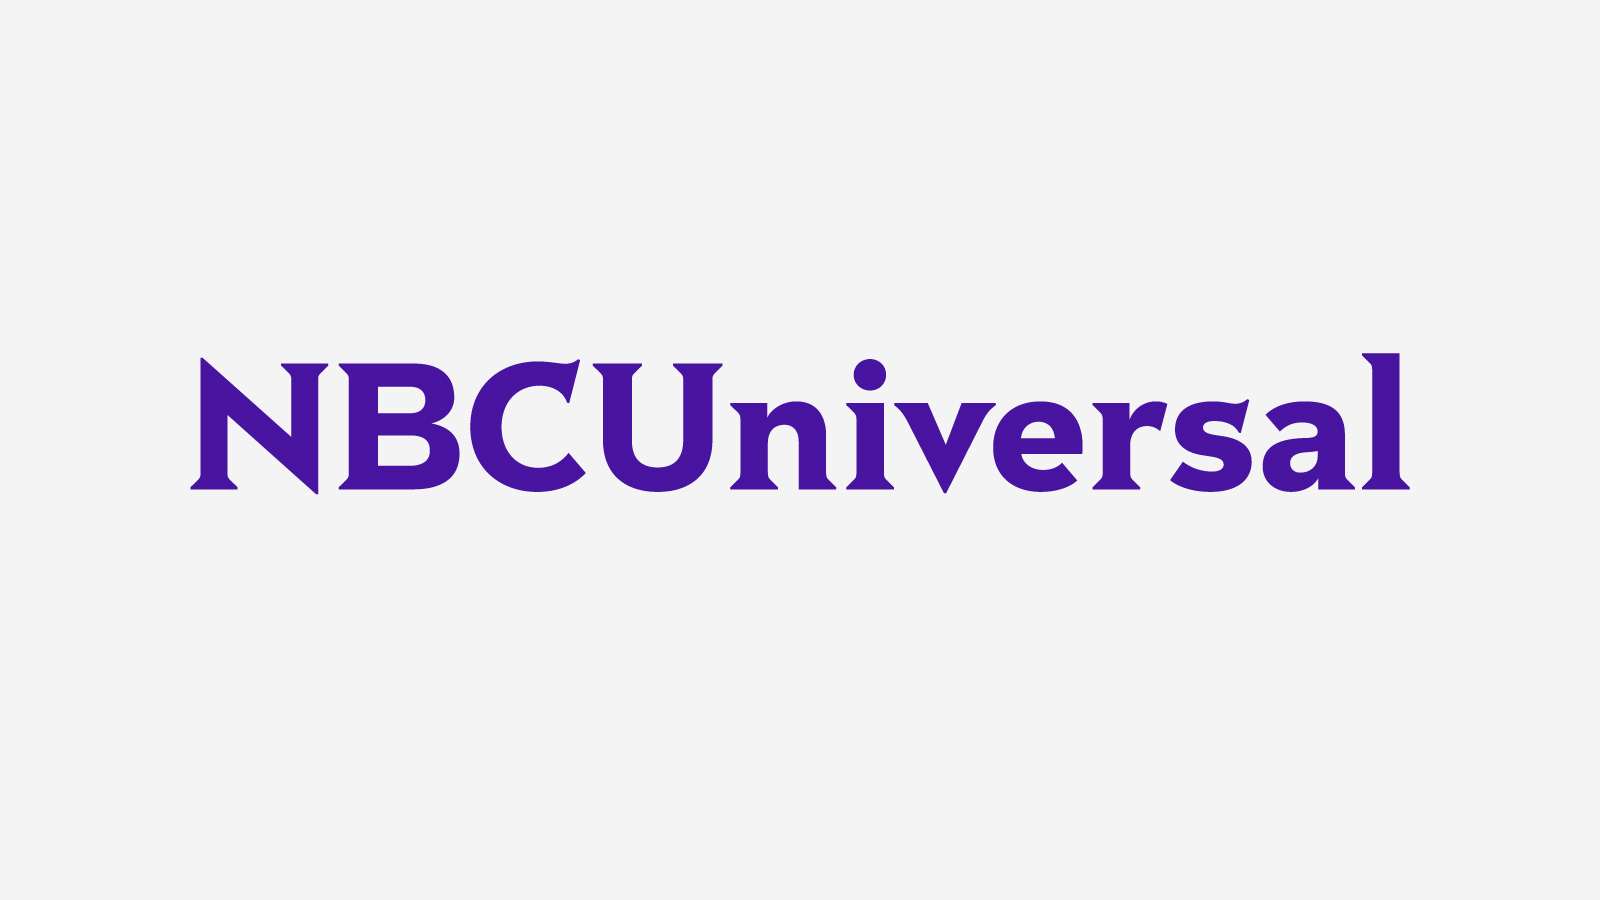 NBCU logo